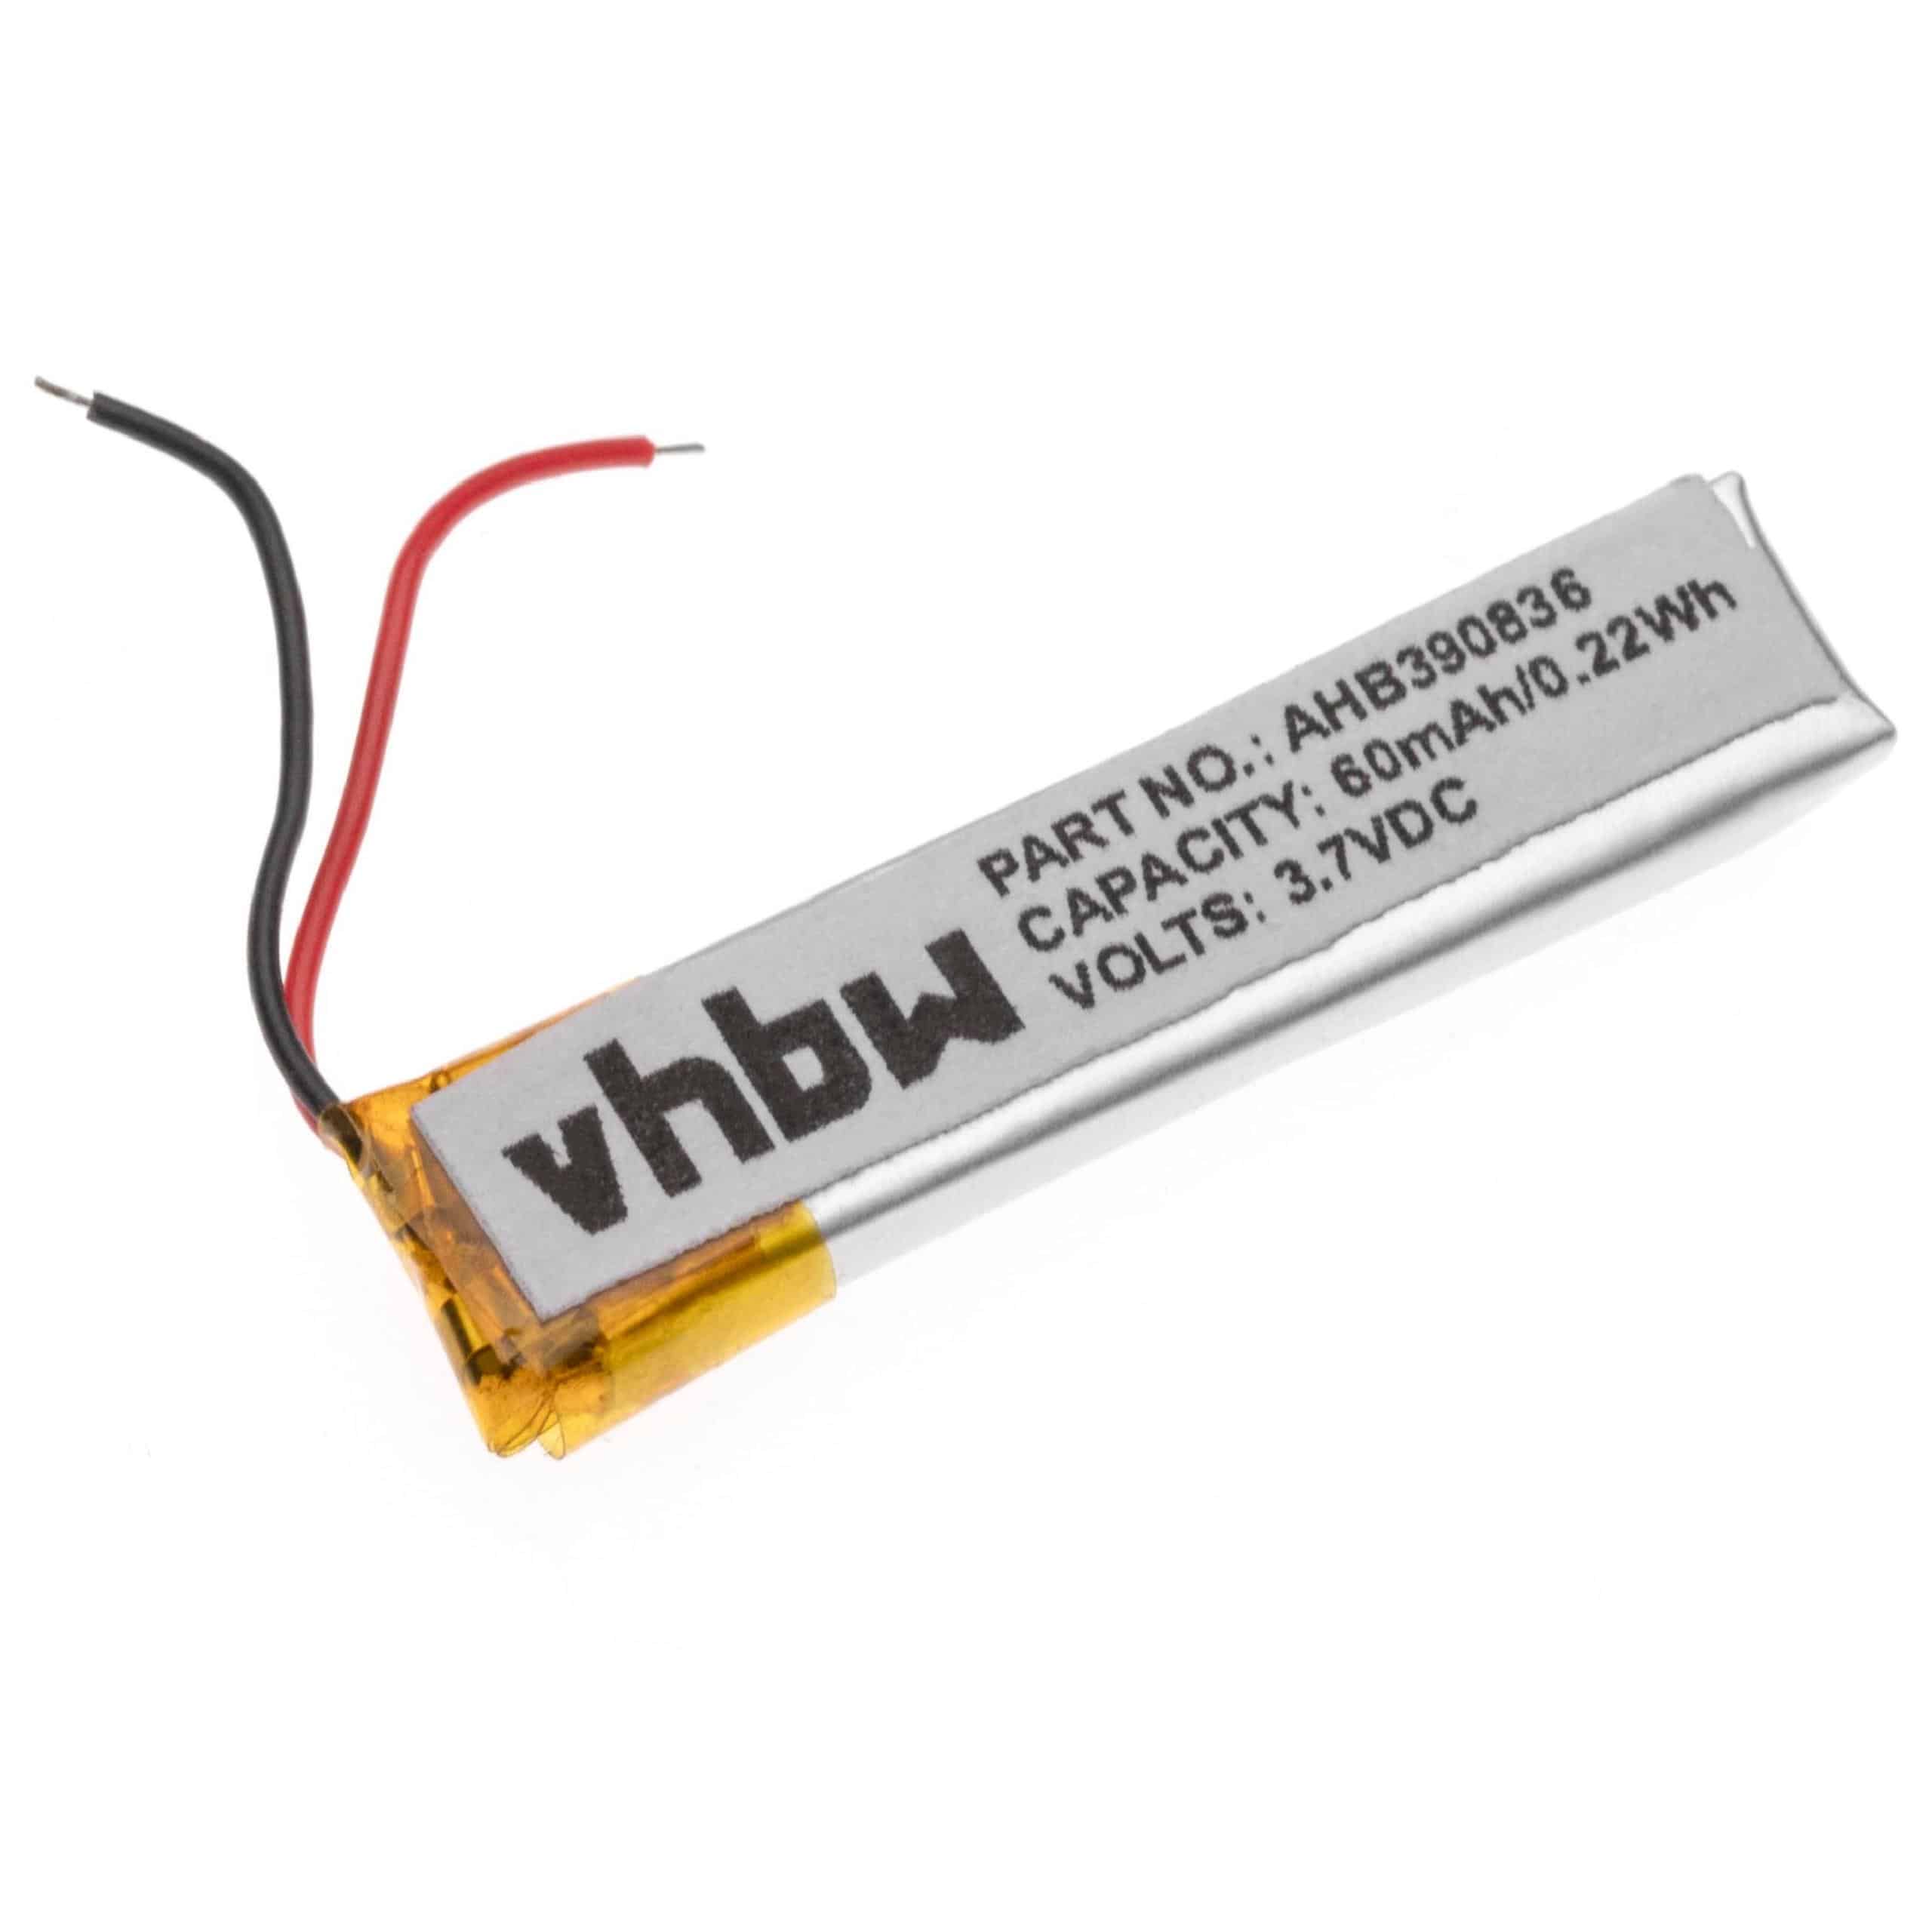 Wireless Headset Battery Replacement for Jabra CPL-556, B350735, AHB390836, HS-11 - 60mAh 3.7V Li-polymer